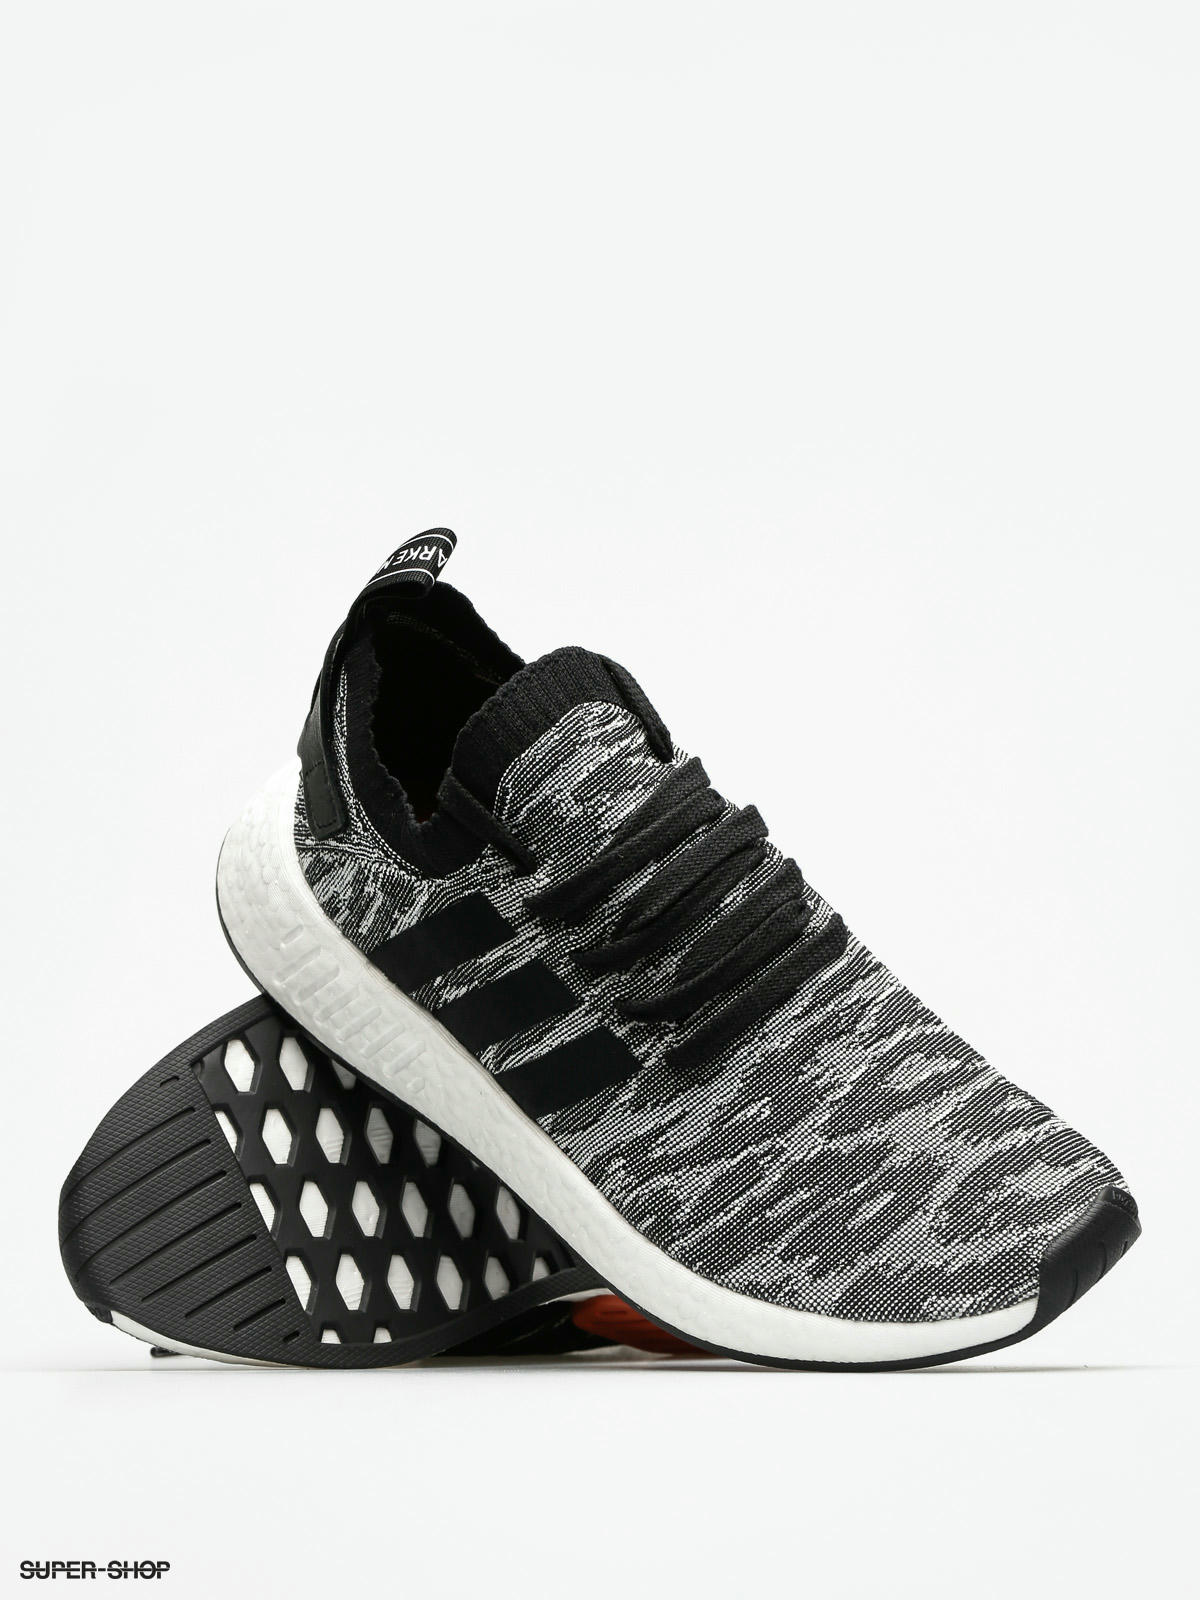 adidas Shoes Nmd R2 Pk (core black/core black/ftwr white)